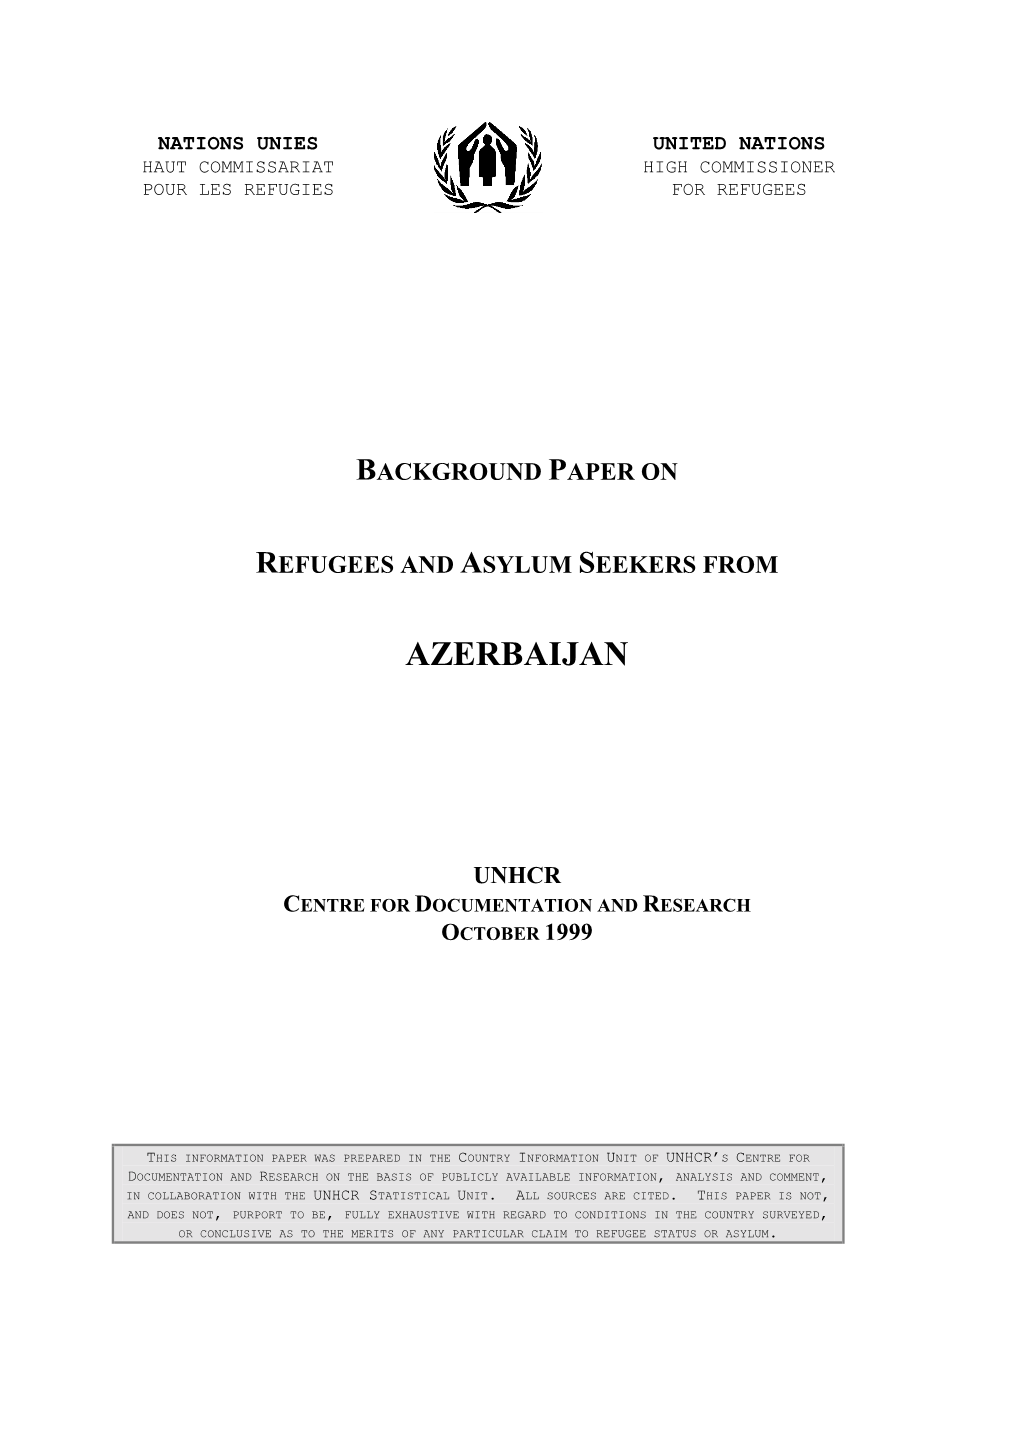 Azerbaijan Background Paper 99